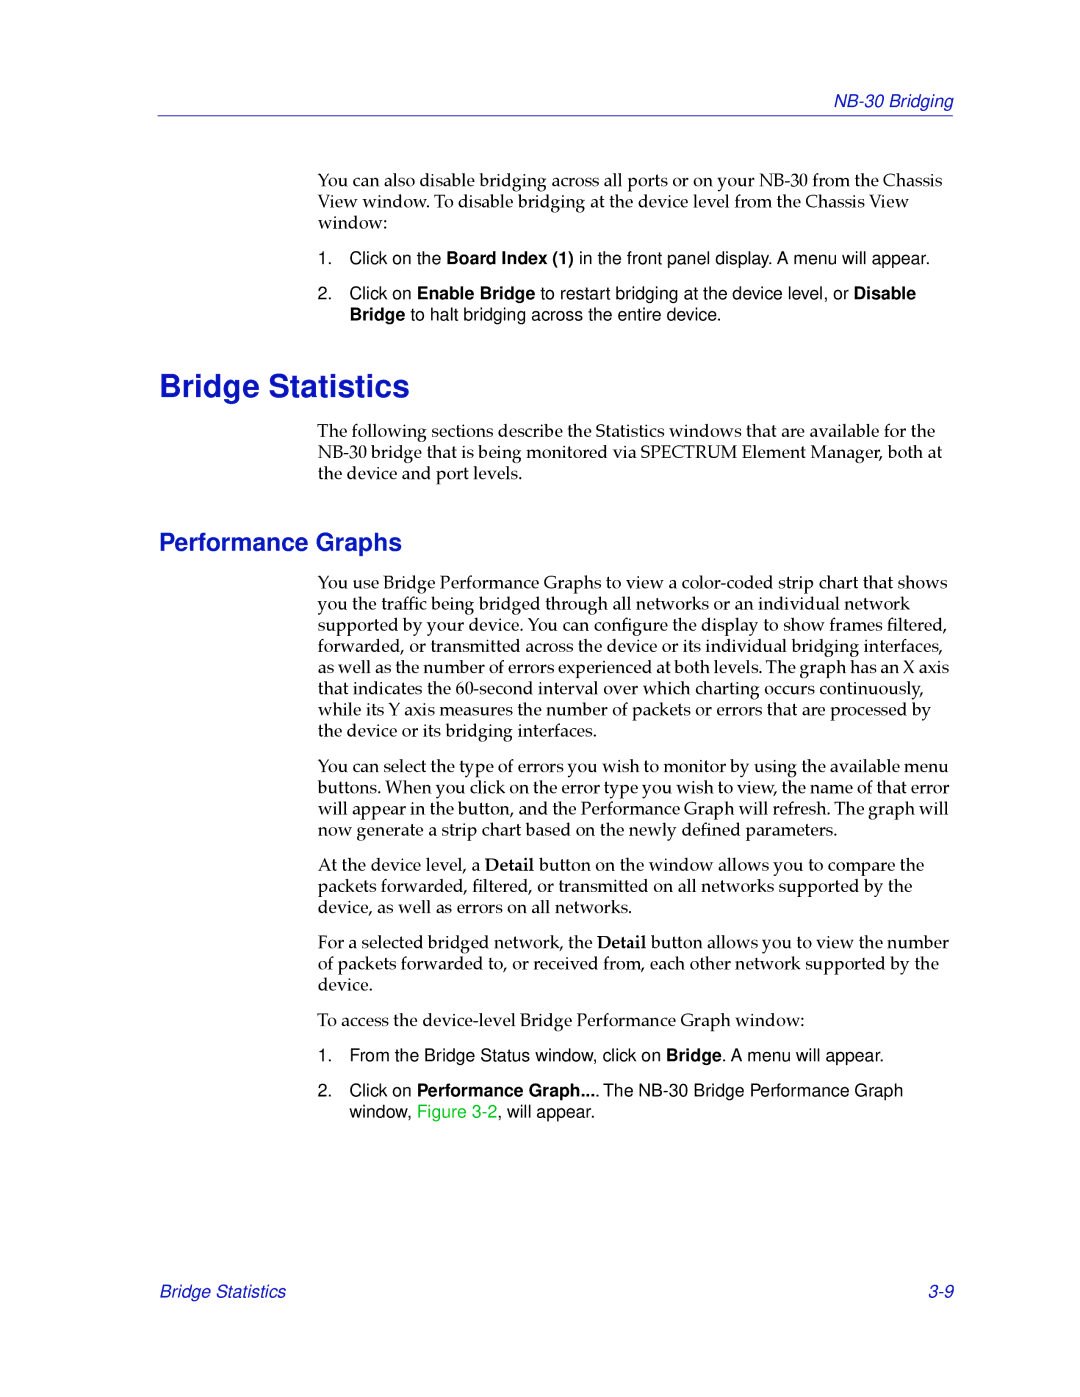 Cabletron Systems NB30 manual Bridge Statistics, Performance Graphs 